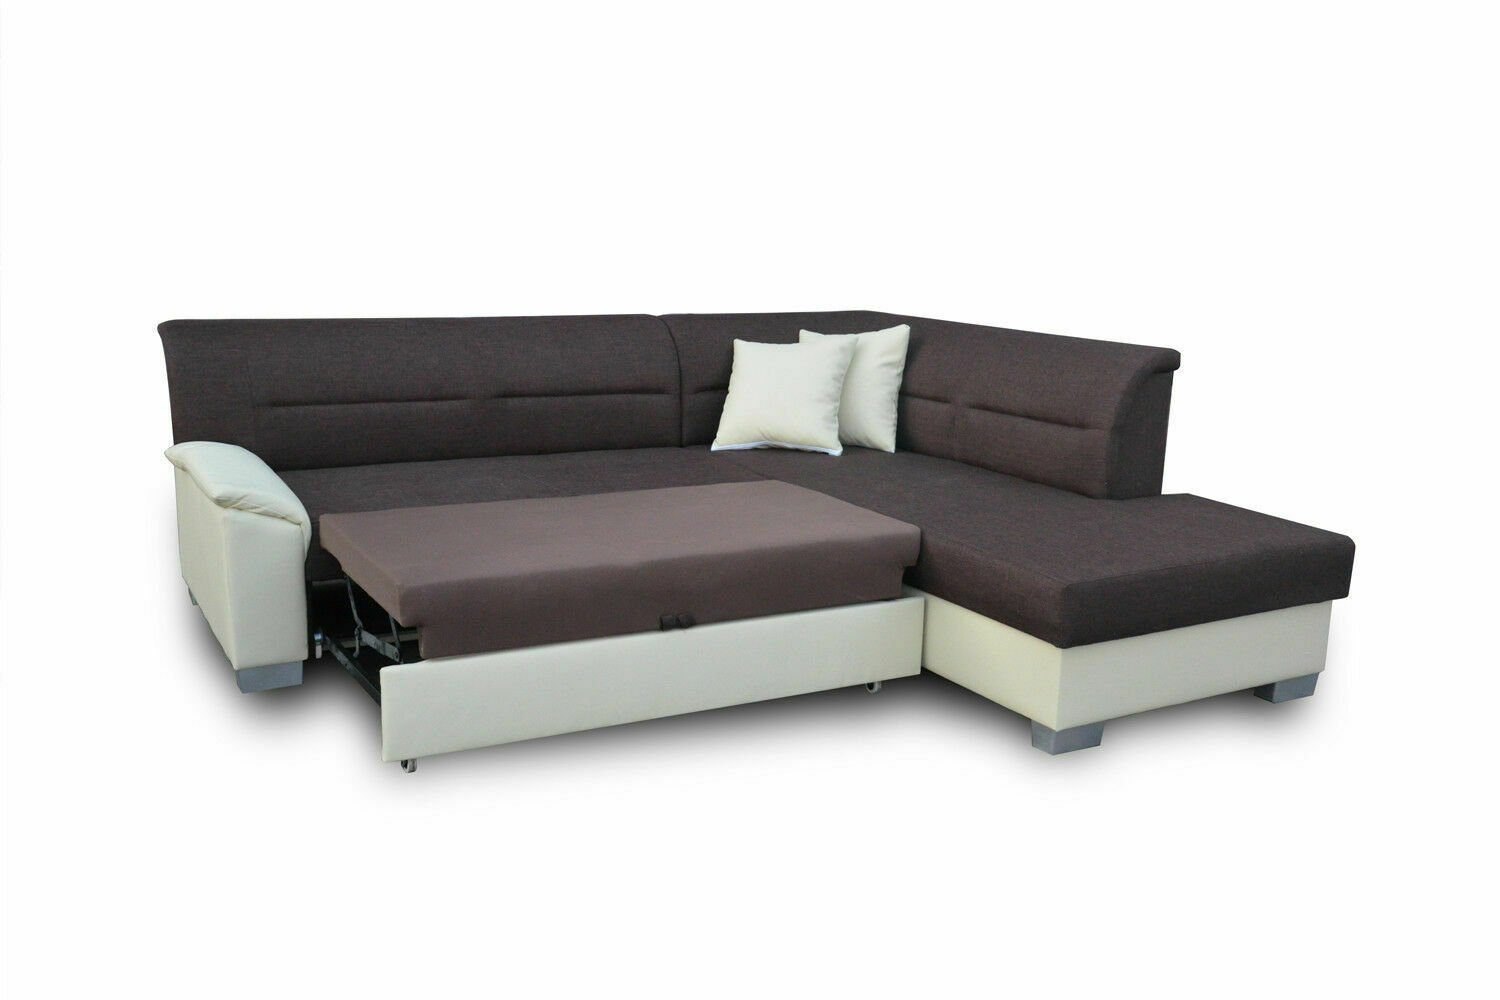 JVmoebel Ecksofa Design Sofa Ecksofa Polster Couch Braun/Weiß Schlafsofa Bettfunktion Mit Bettfunktion Textil